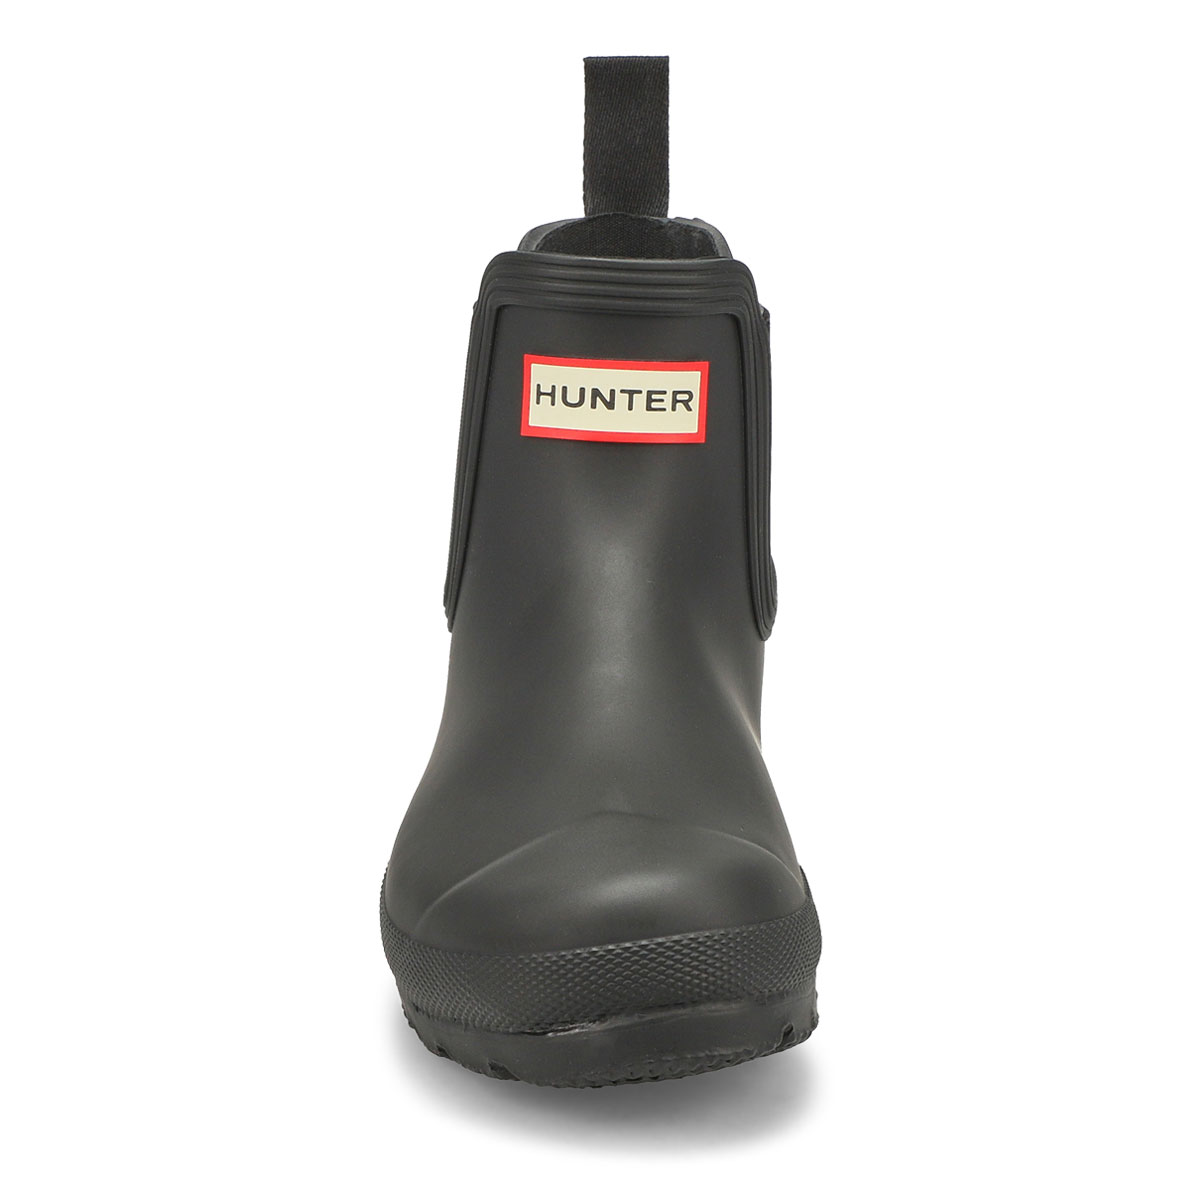 Hunter Women's Original Short Rain Boots Black